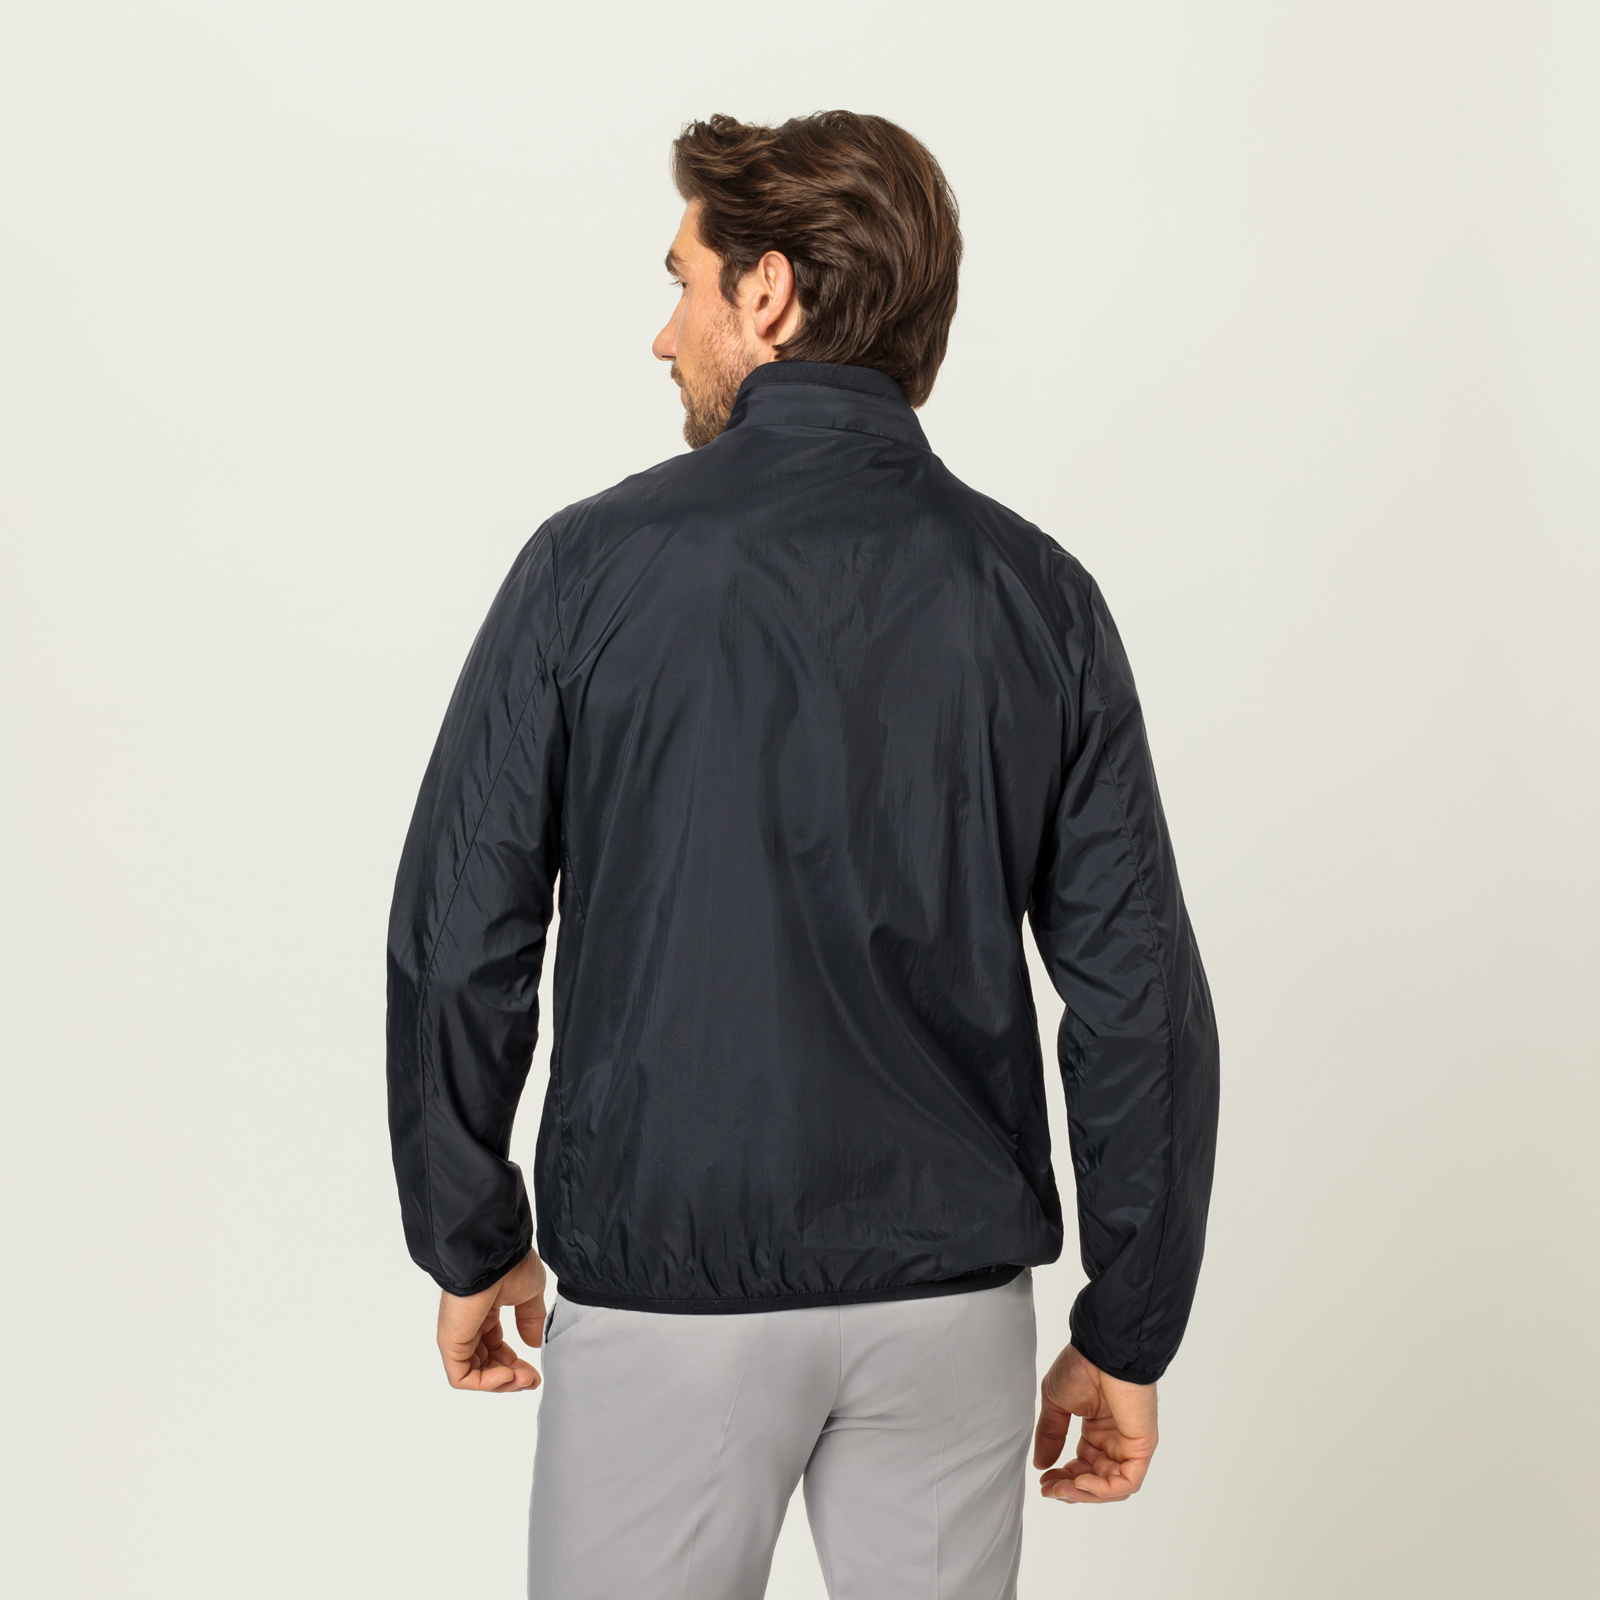 Men's windproof golf jacket made from lightweight microfibre